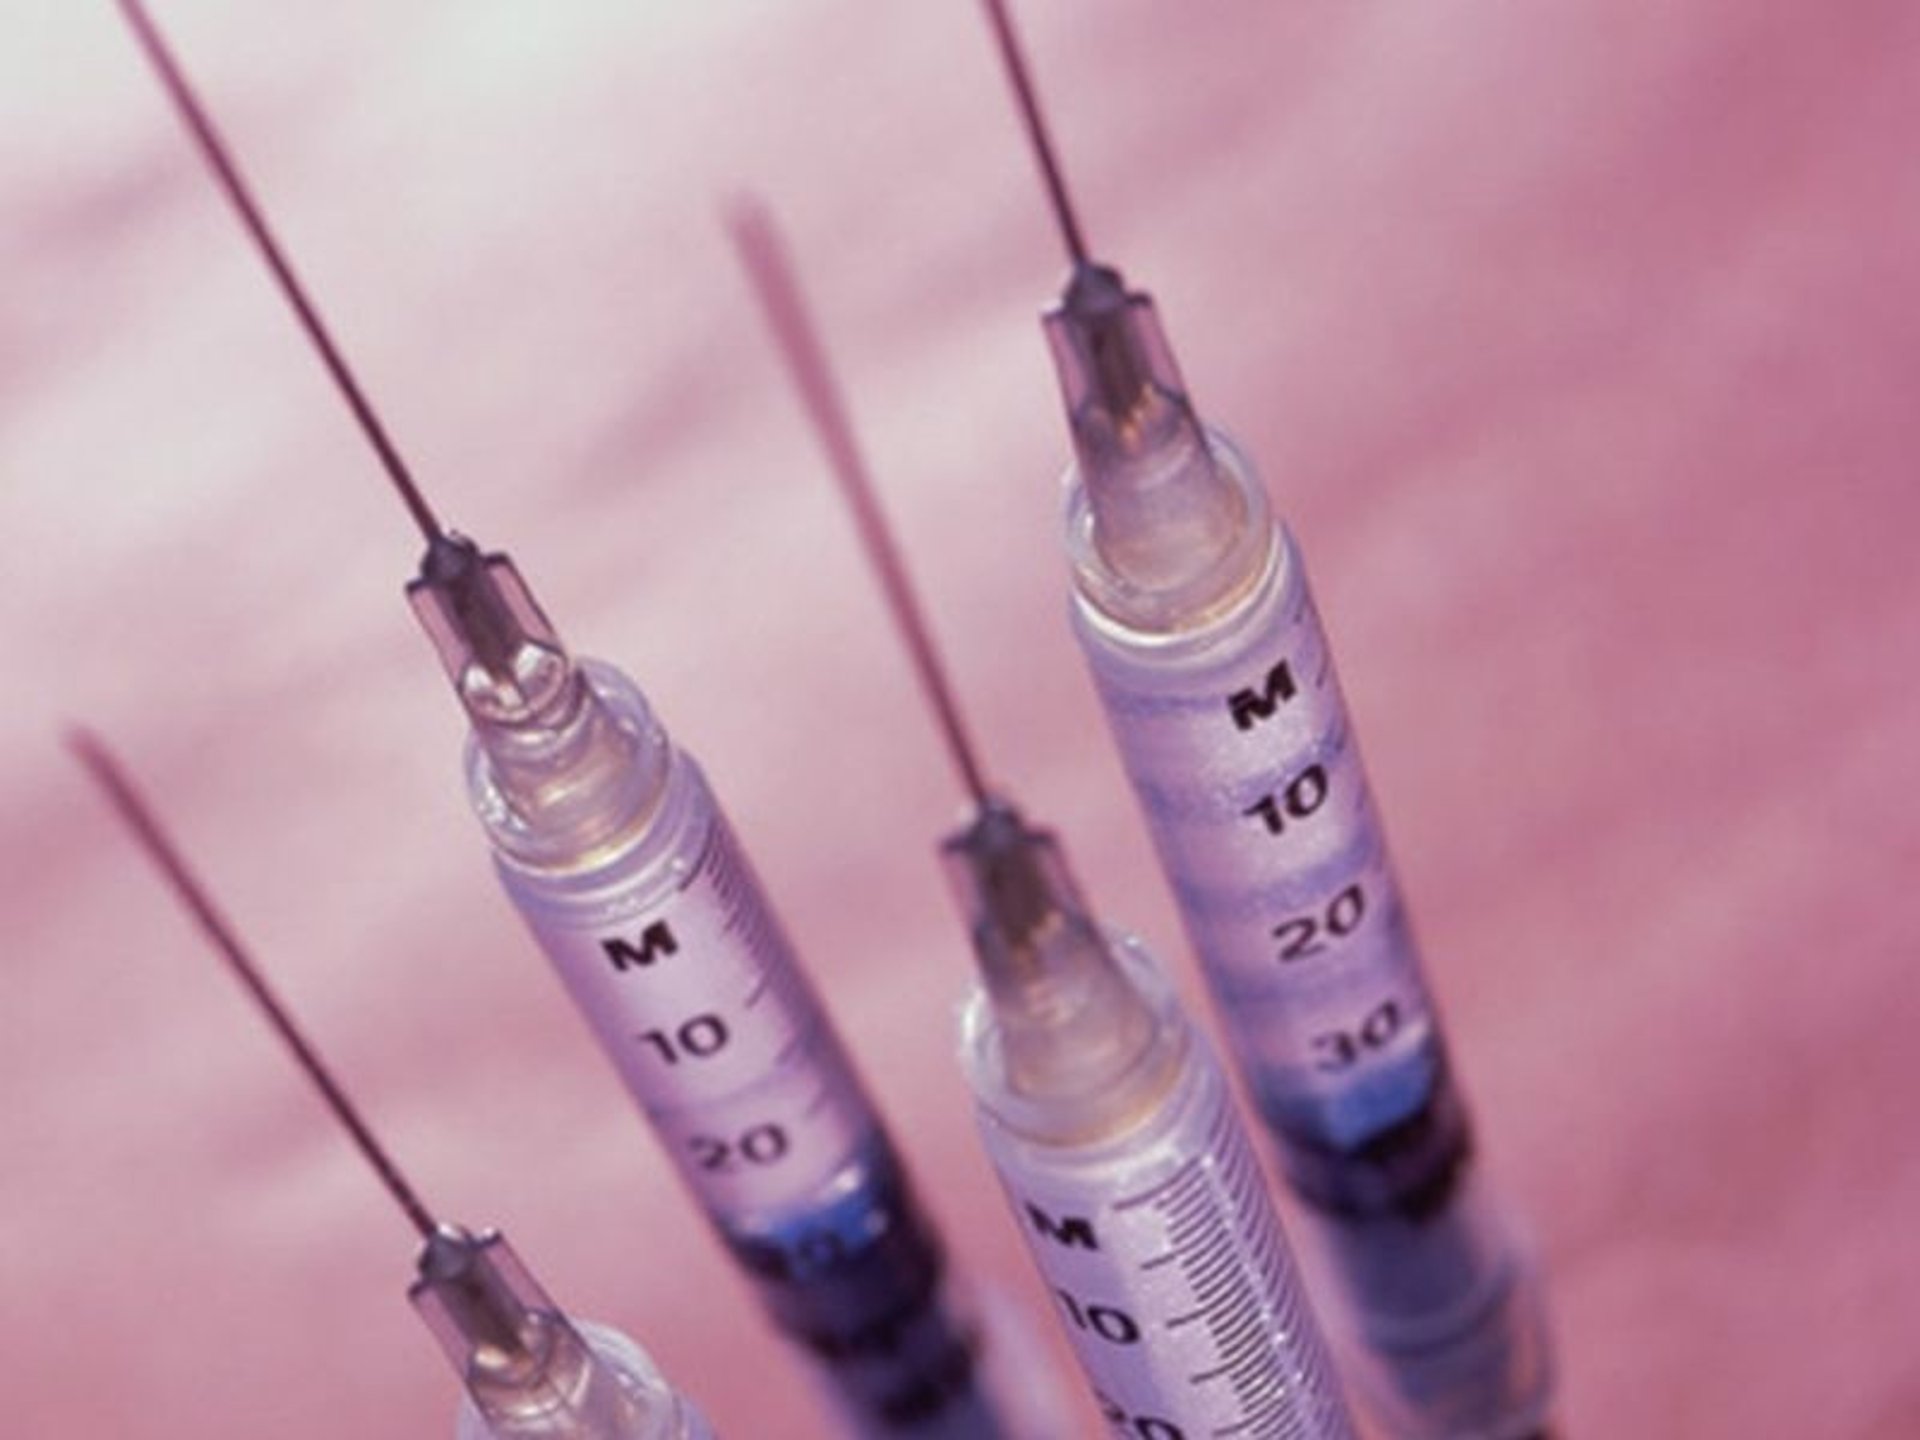 FDA Approves Third COVID Vaccine: Johnson & Johnson's Single-Shot thumbnail